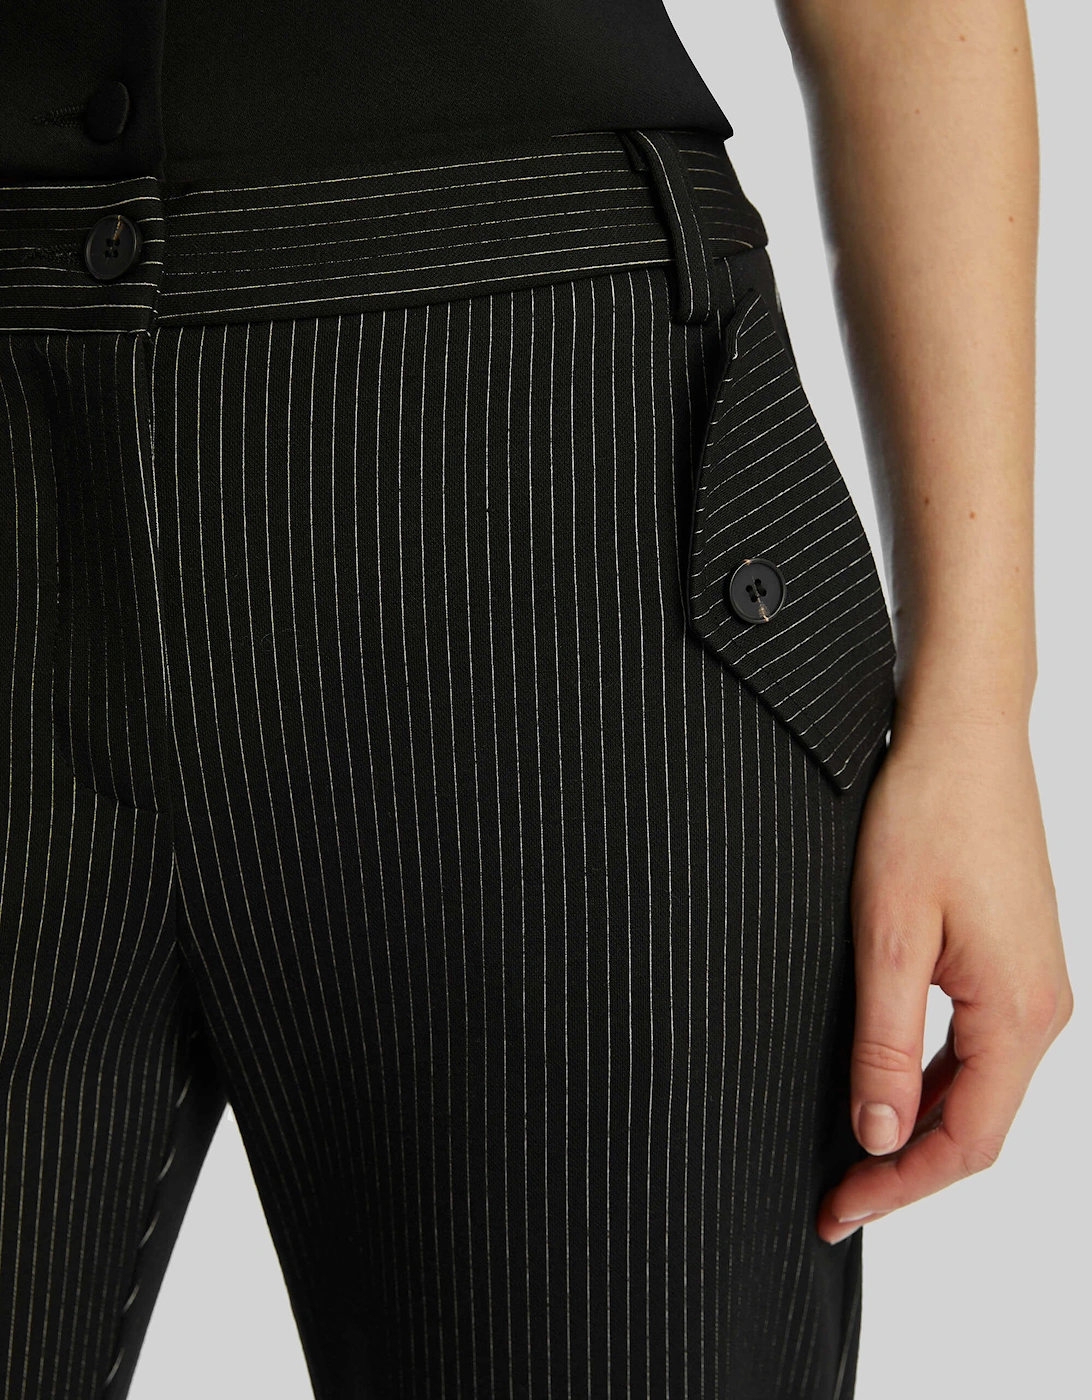 Pin Stripe Tailored Trousers